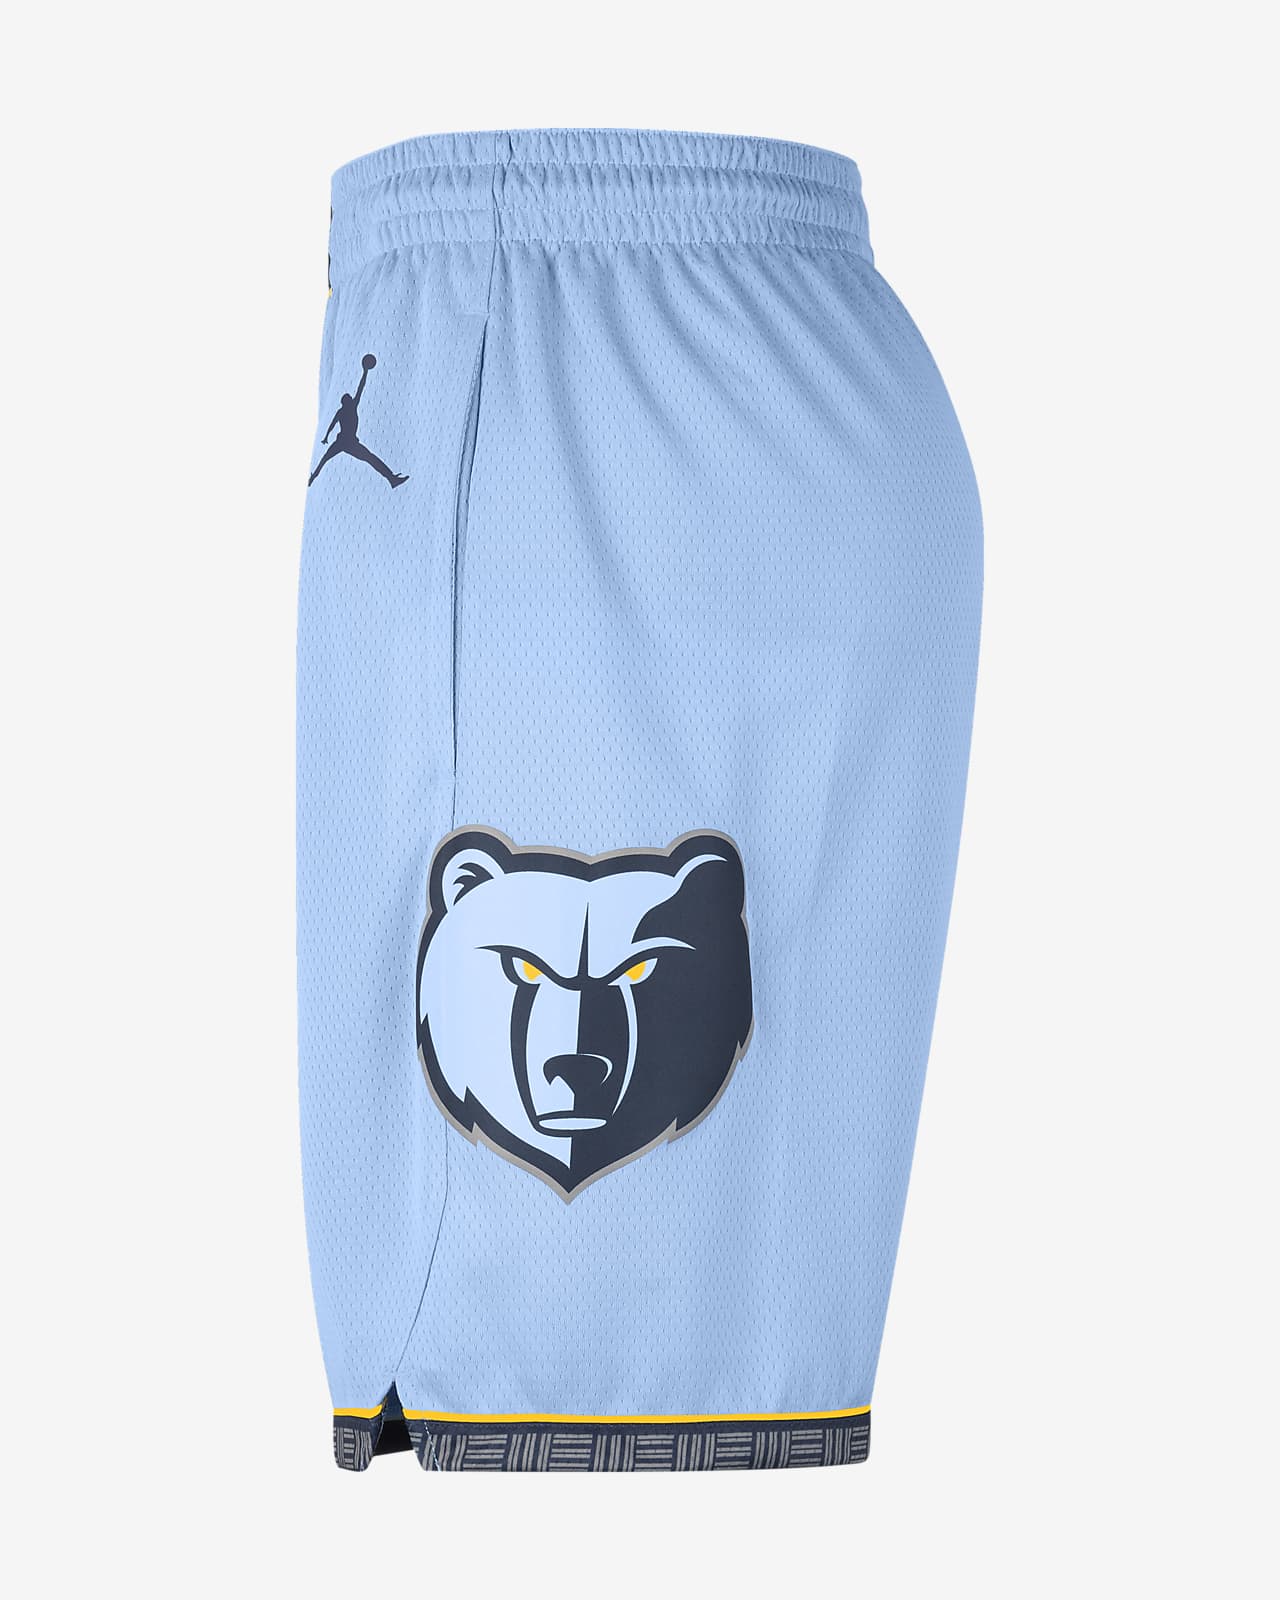 design memphis grizzlies jersey short